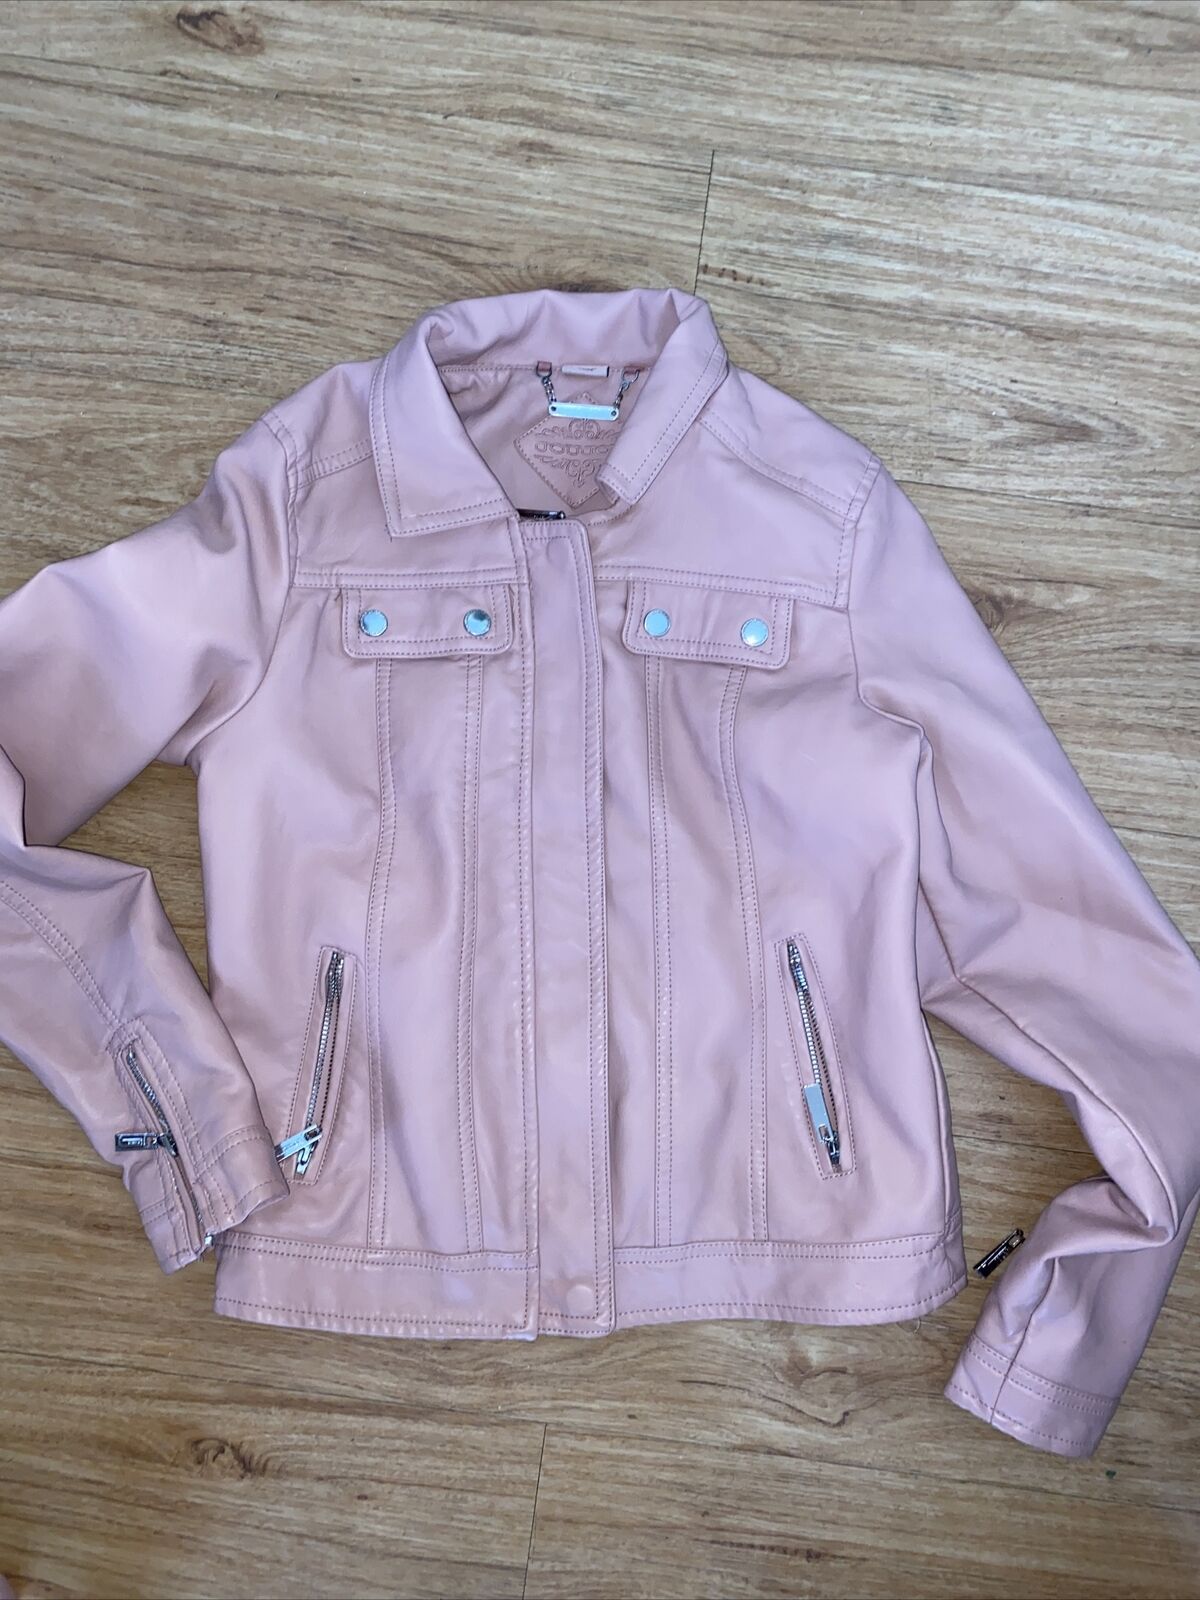 Joujou Girls Youth Xl Pink Leather Look Jacket Coat